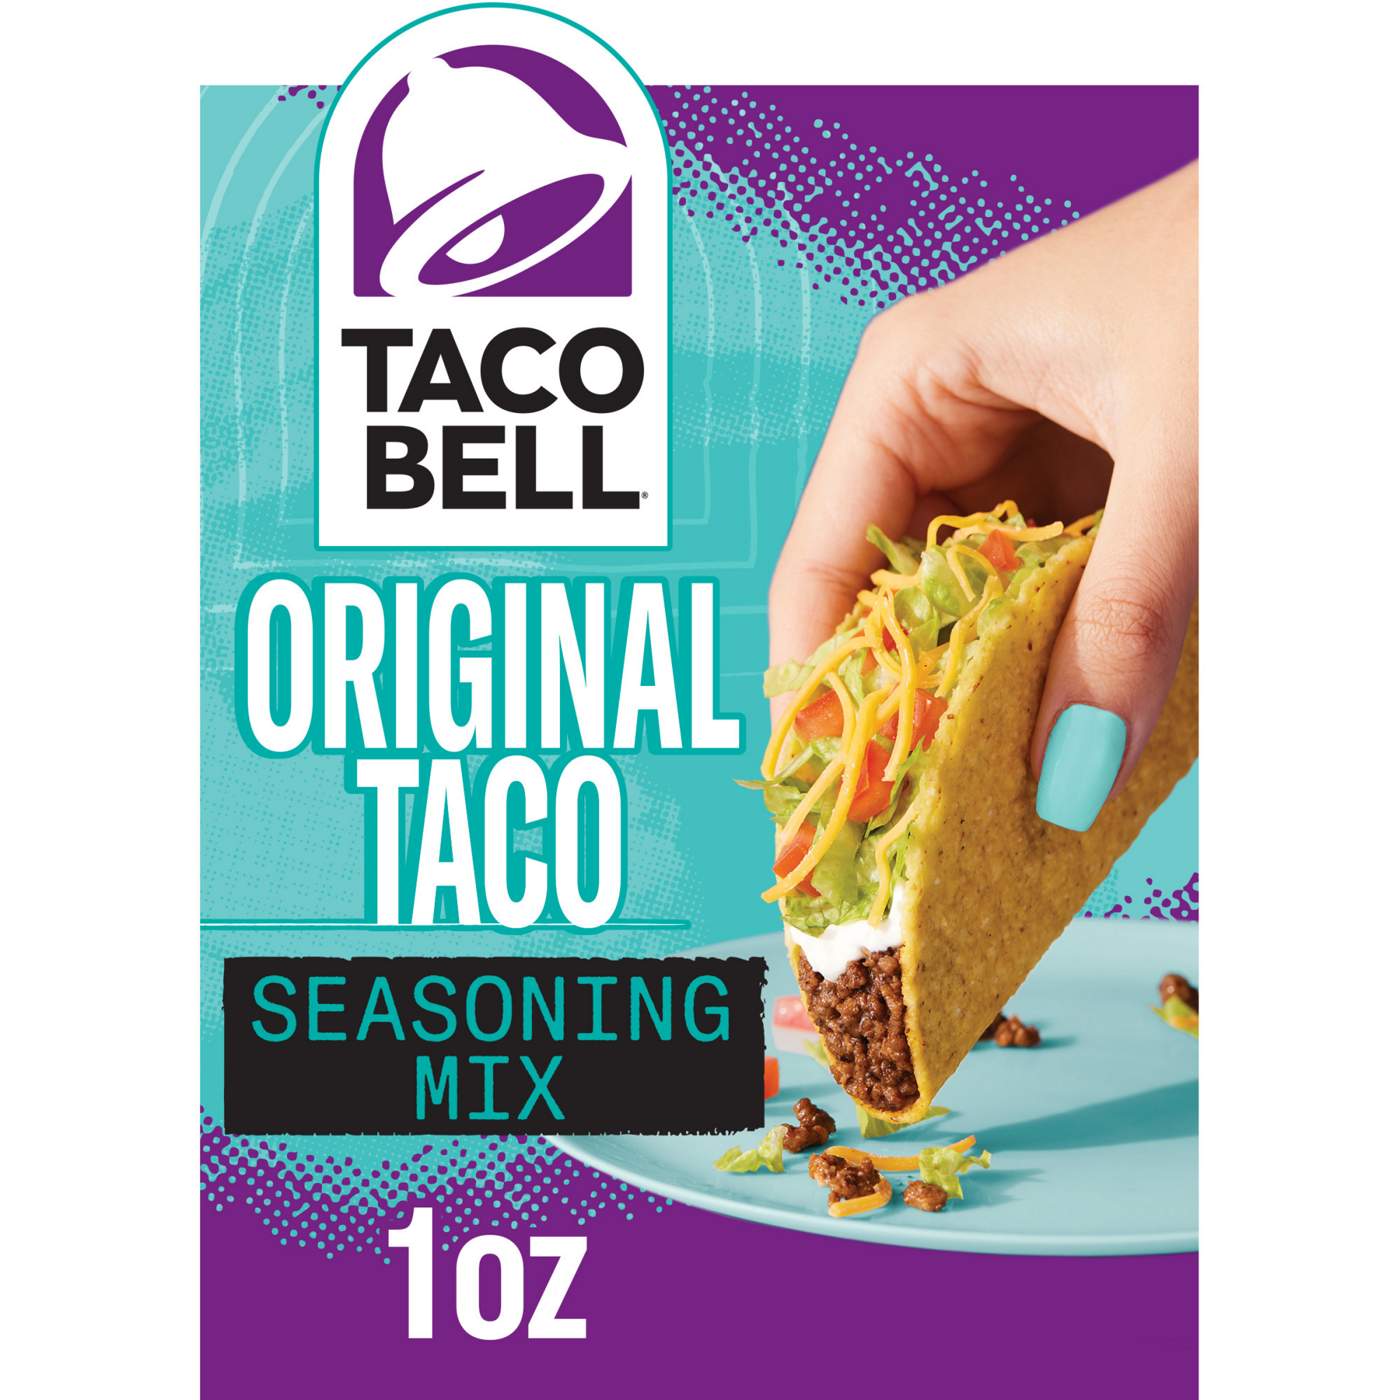 Taco Bell Original Taco Seasoning Mix - Shop Spice Mixes at H-E-B